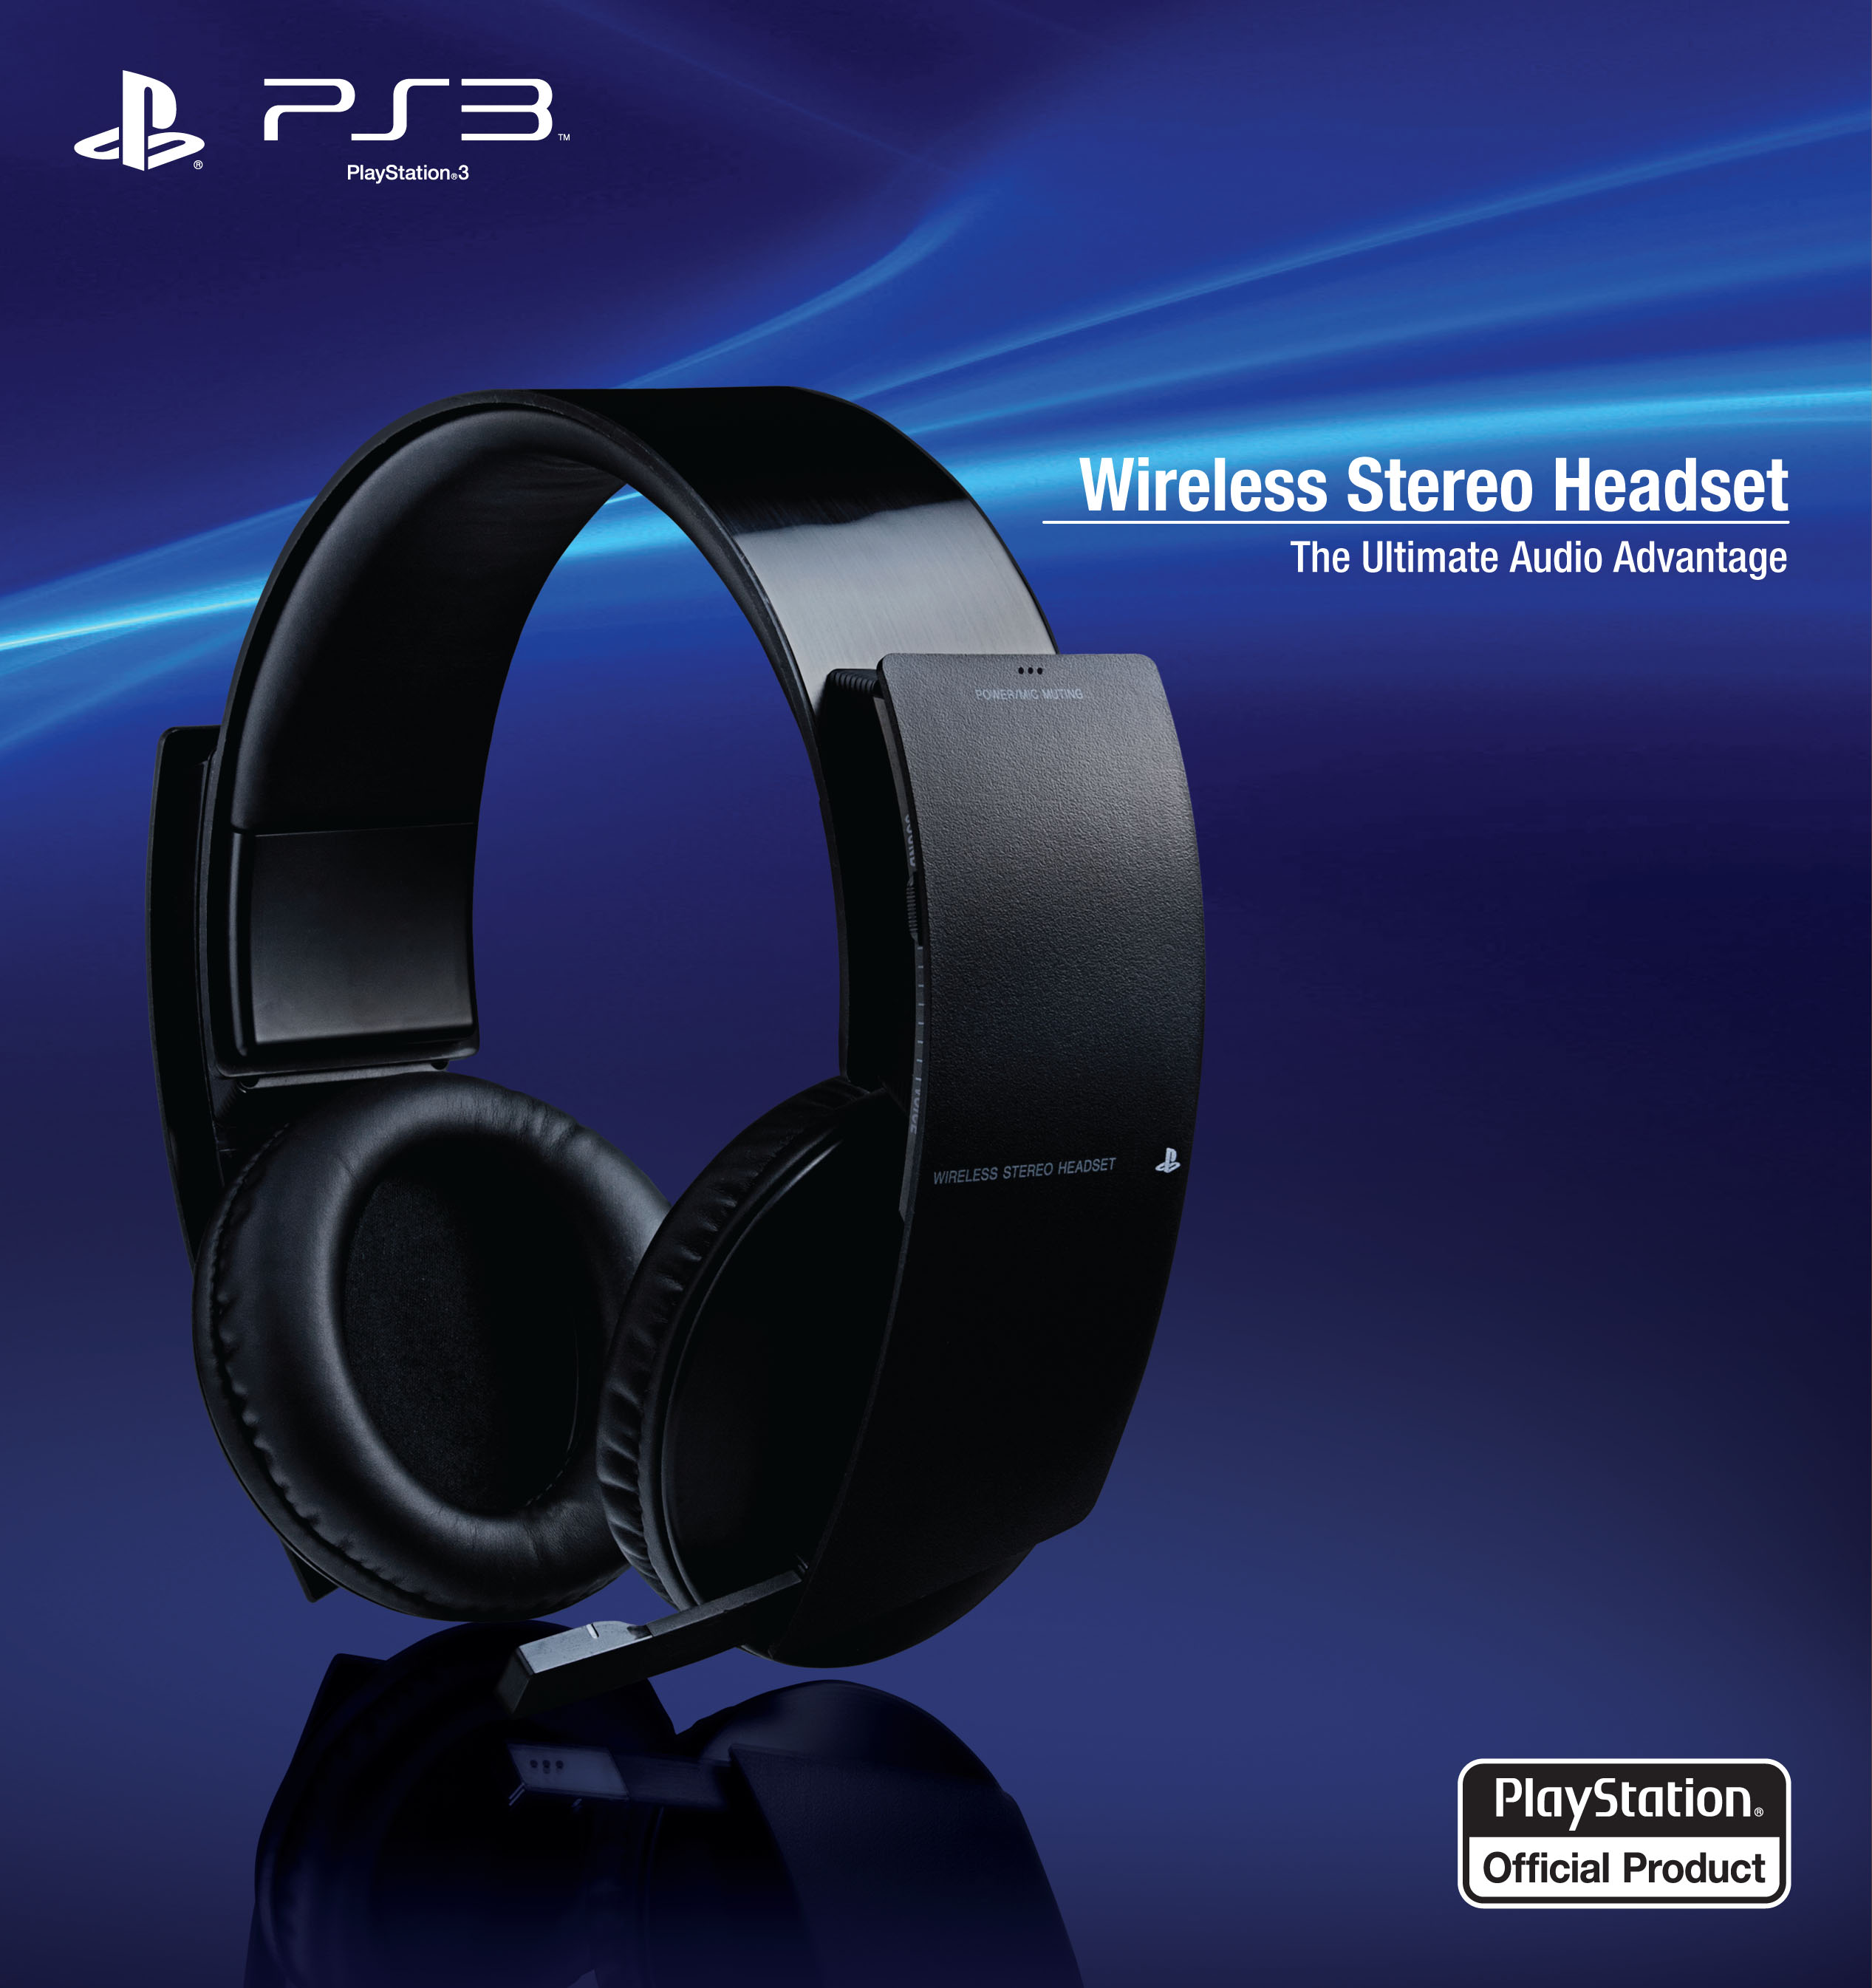 Wireless stereo headset. Sony Wireless stereo Headset Black 7.1. Sony ps3 Wireless stereo Headset. Sony Wireless stereo Headset 7.1 ps3. Sony ps3 Pulse Wireless Headset.